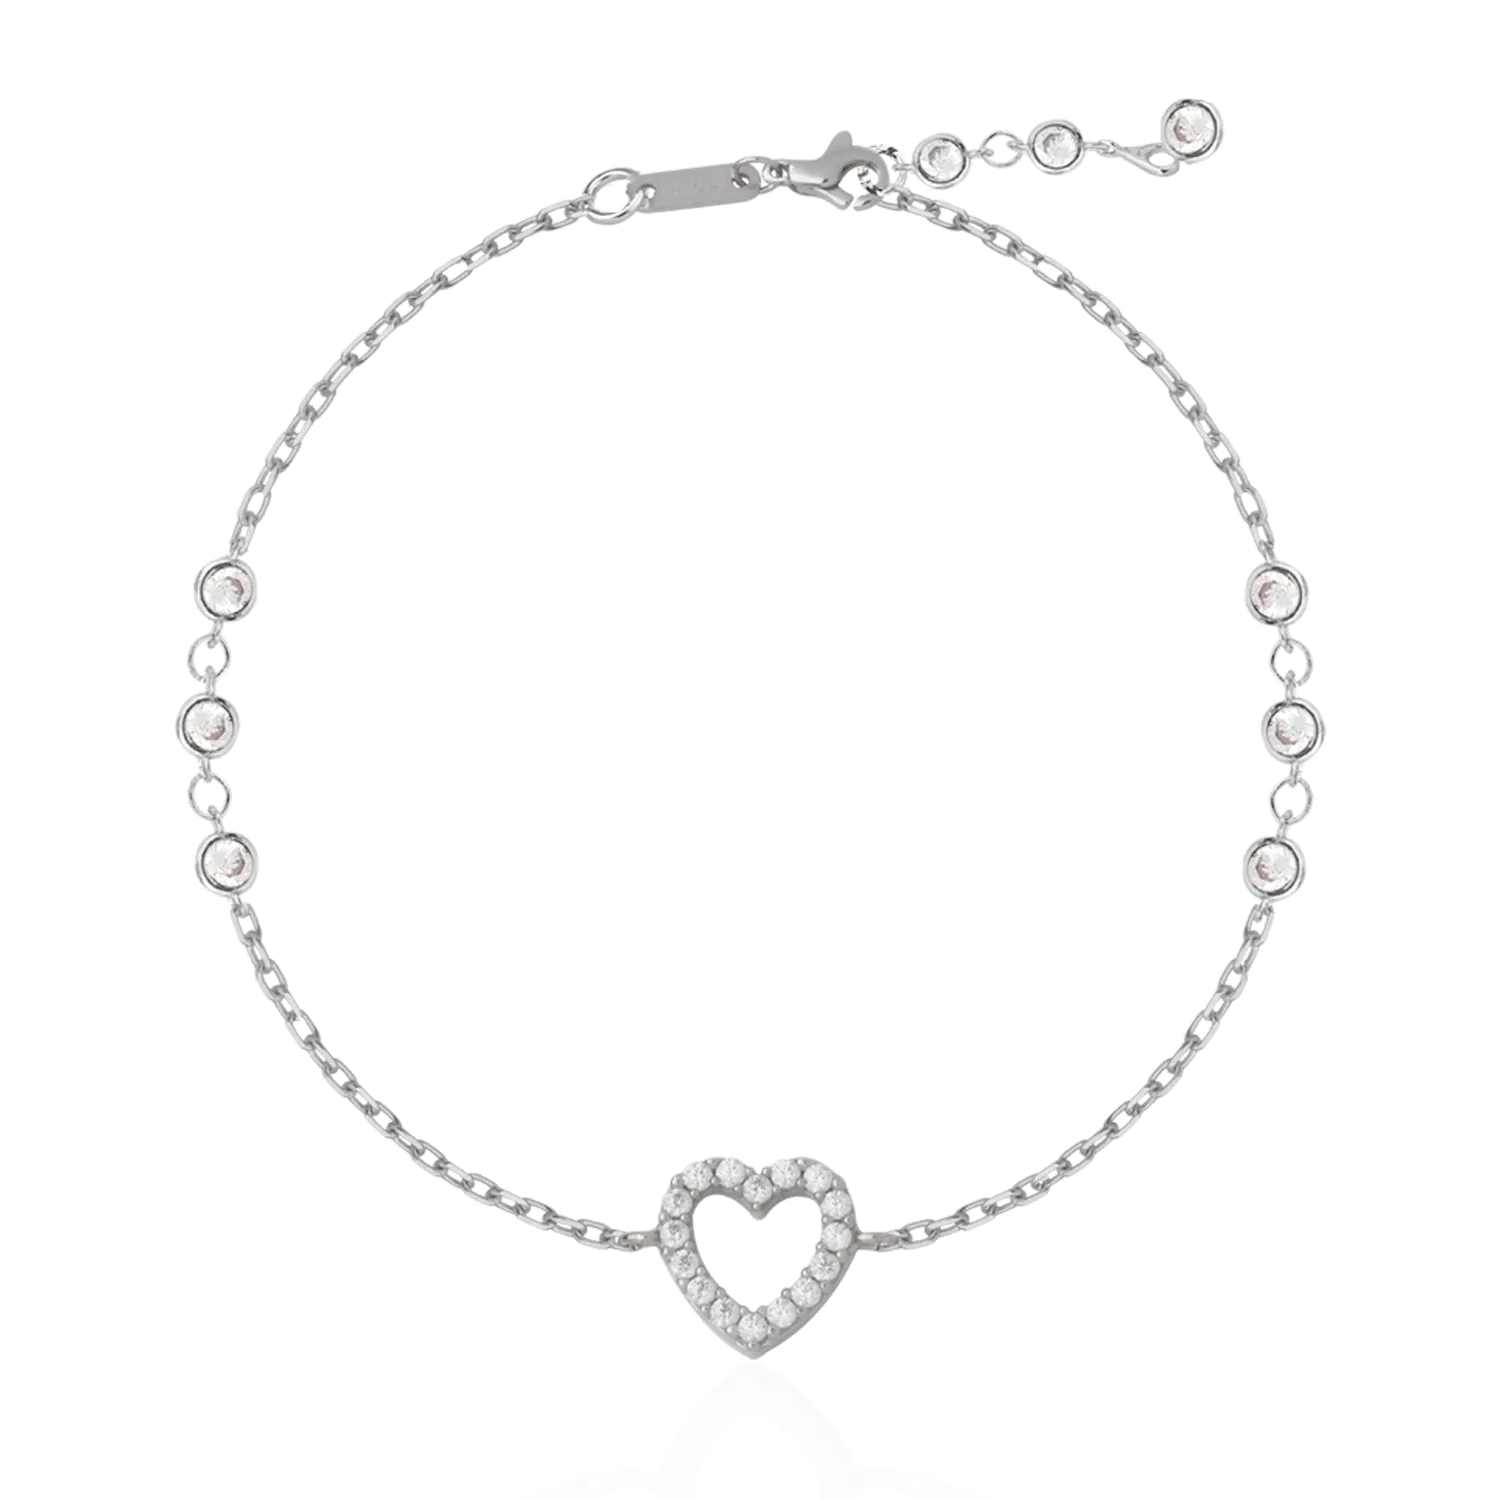 White gold bracelet with zirconia heart pendant